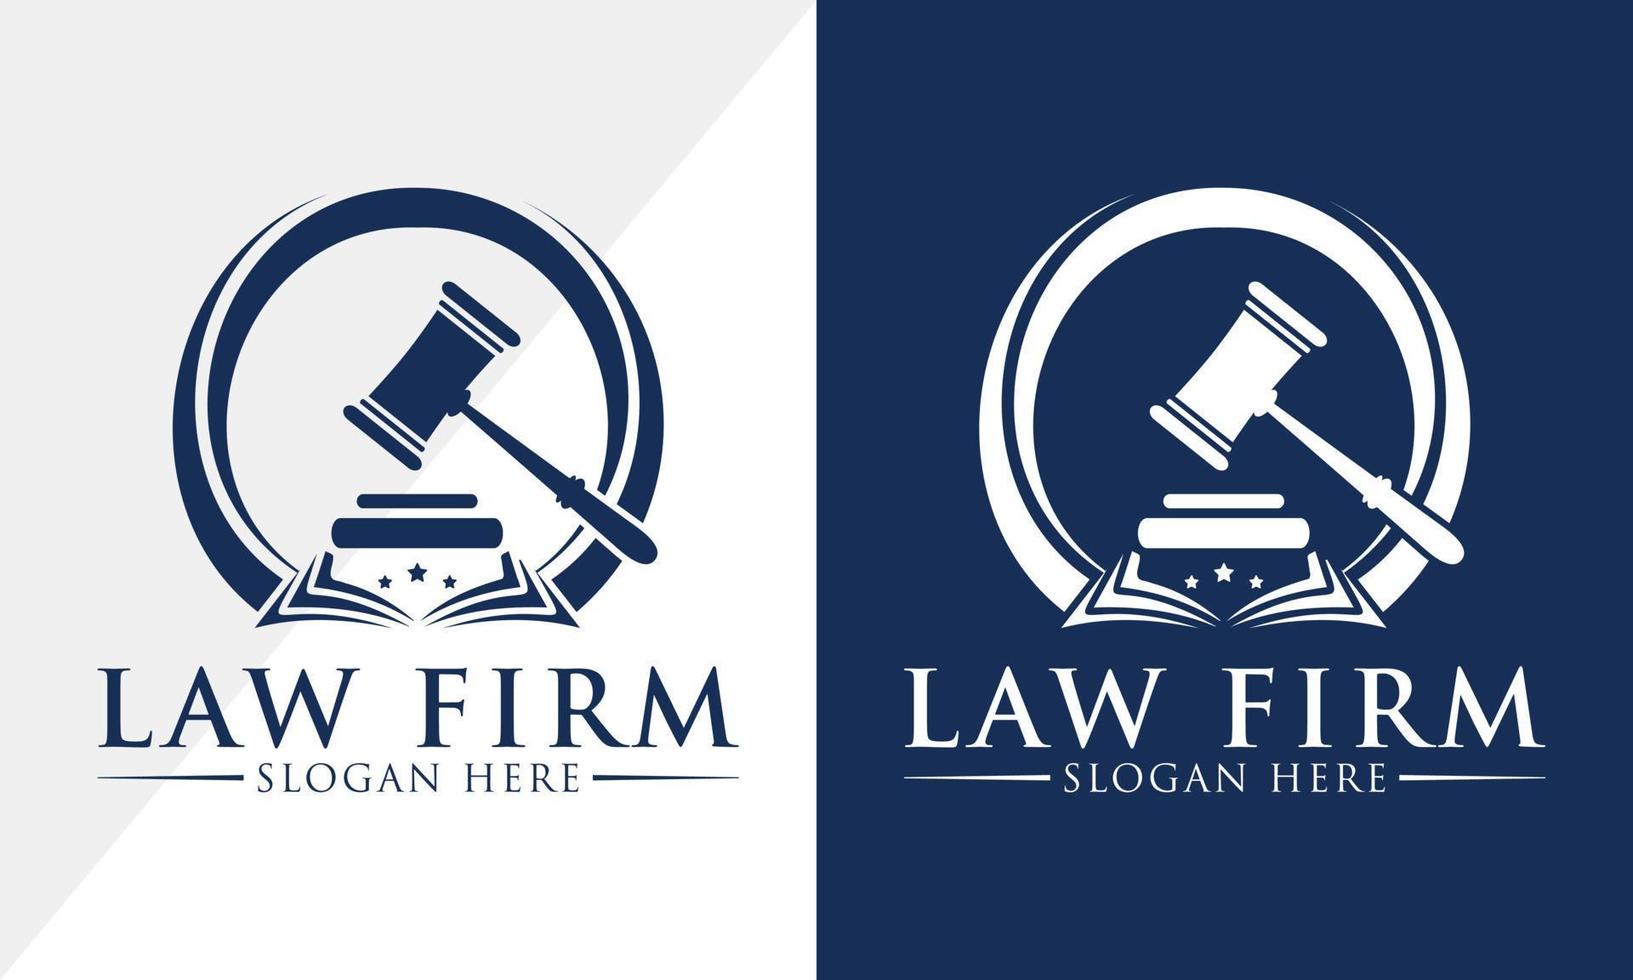 diseño de logotipo de bufete de abogados, plantilla de vector de logotipo de abogado